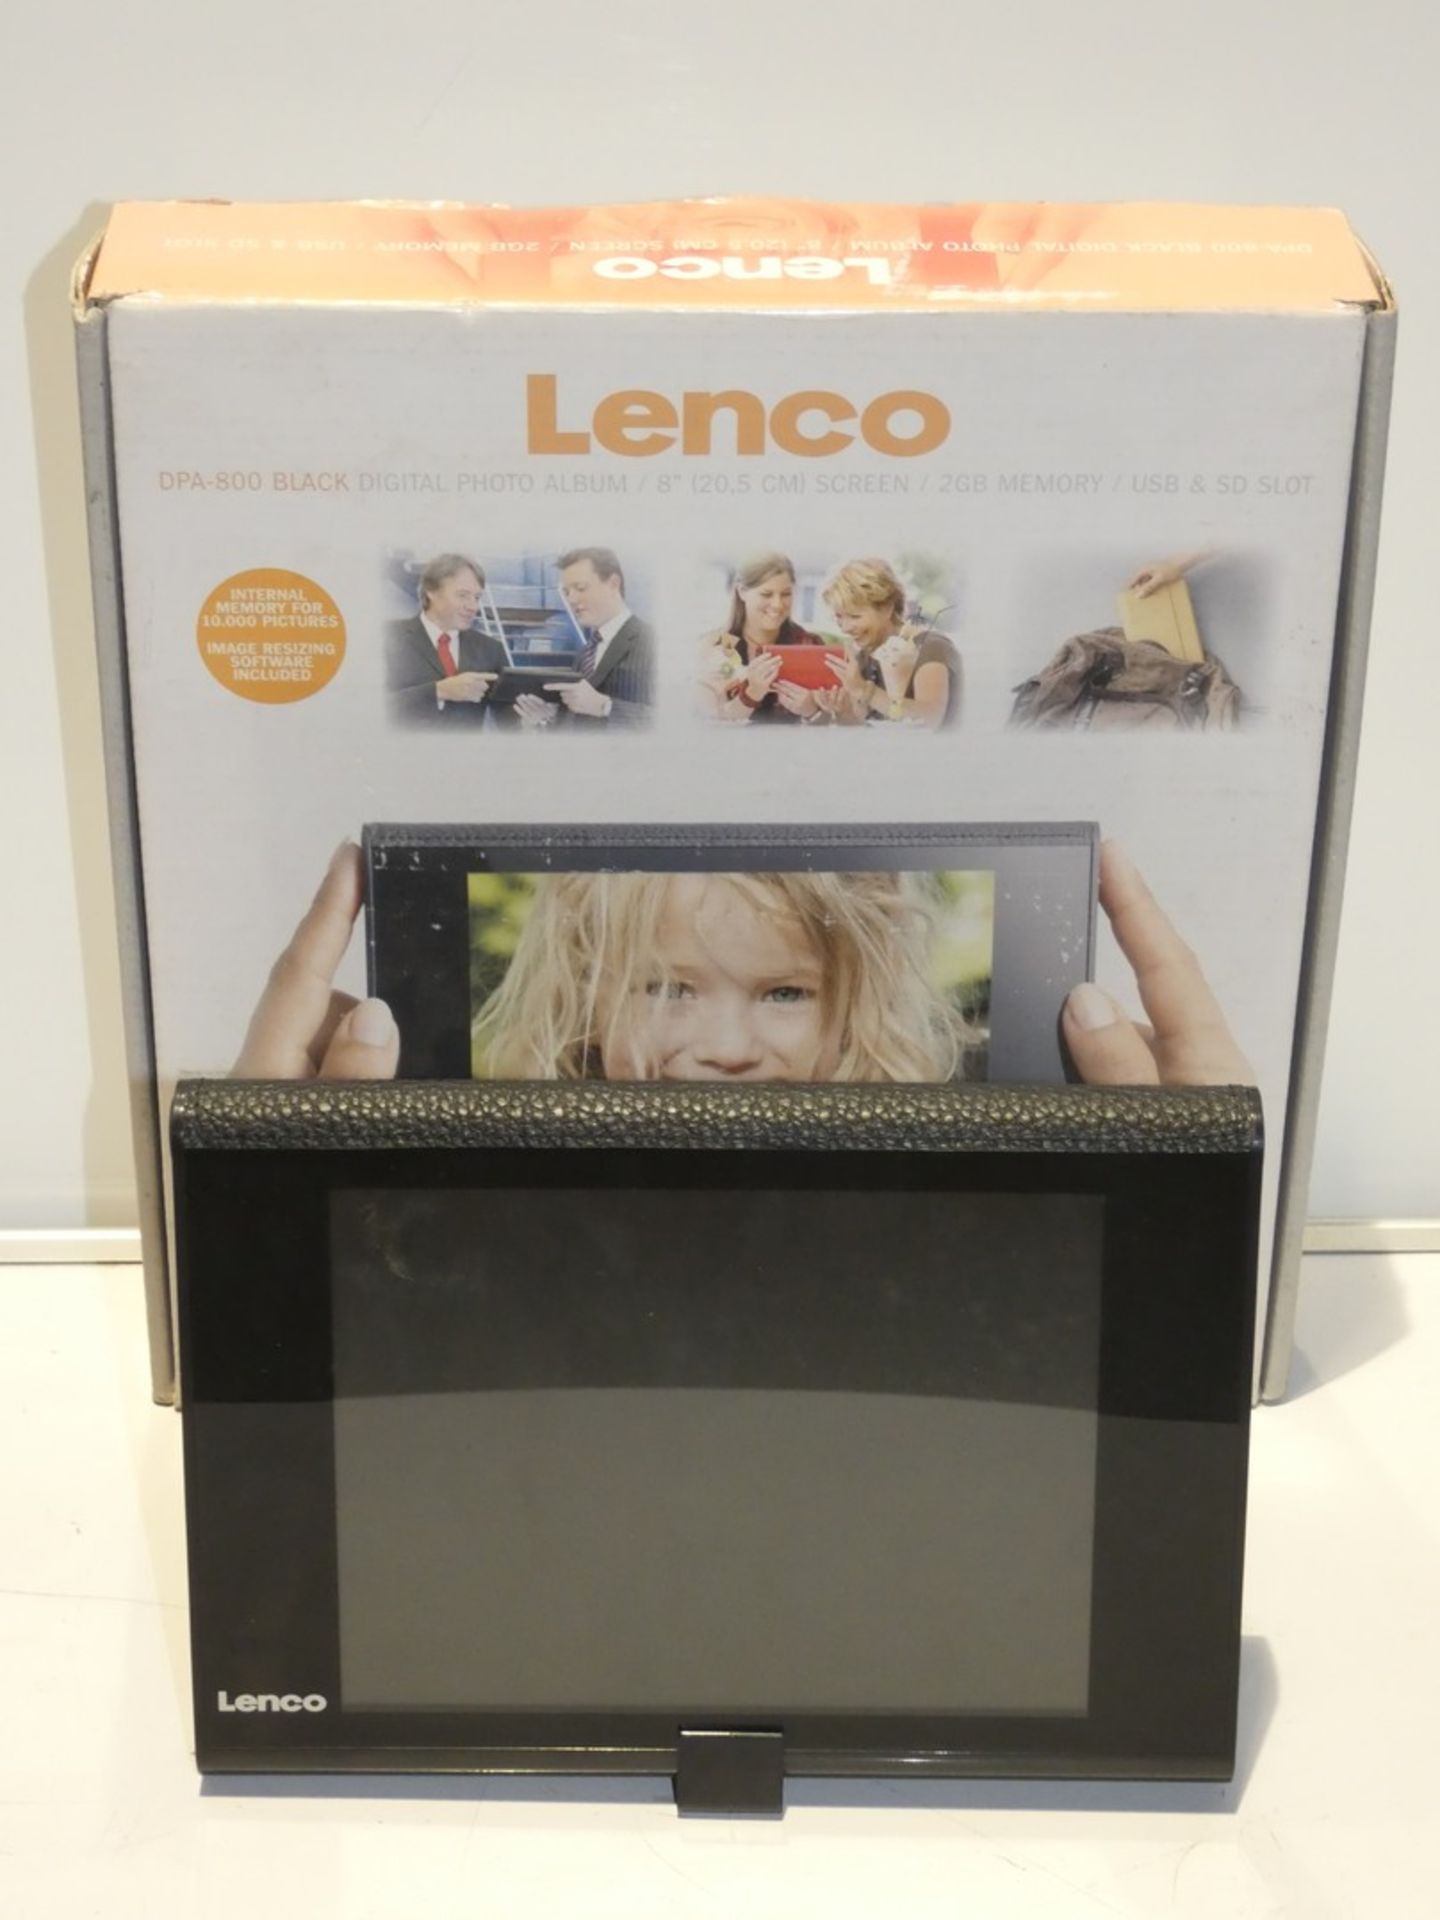 Boxed Lenko Black 8 Inch Digital Photo Frame 2GB Memory USB and SD Card Slot RRP £60